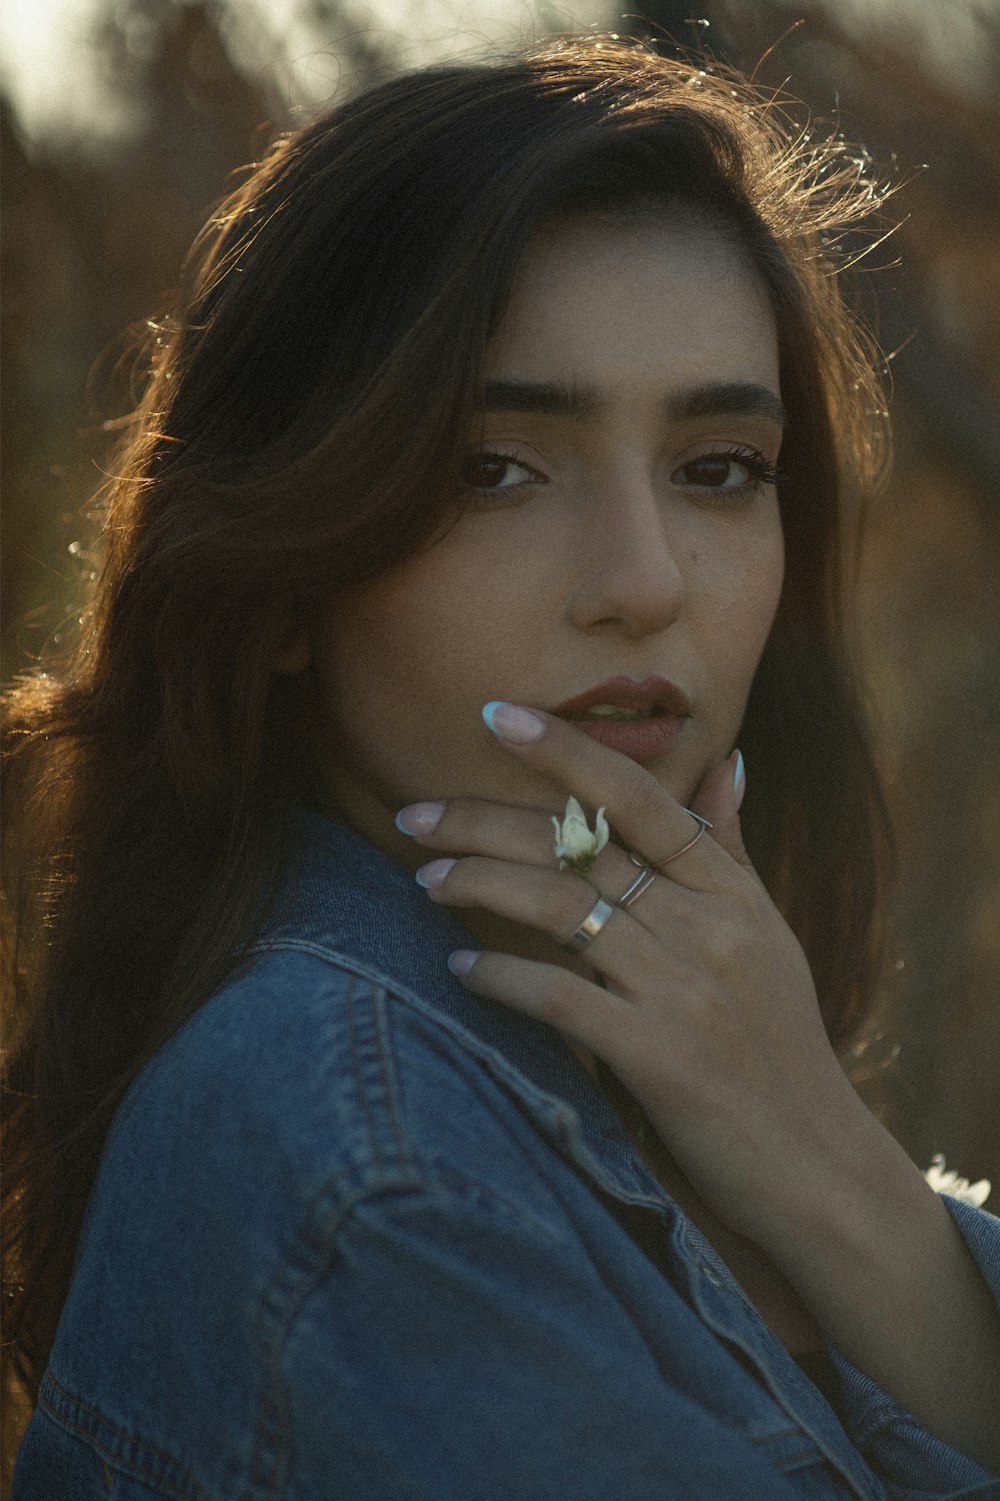 a woman in a denim jacket smoking a cigarette